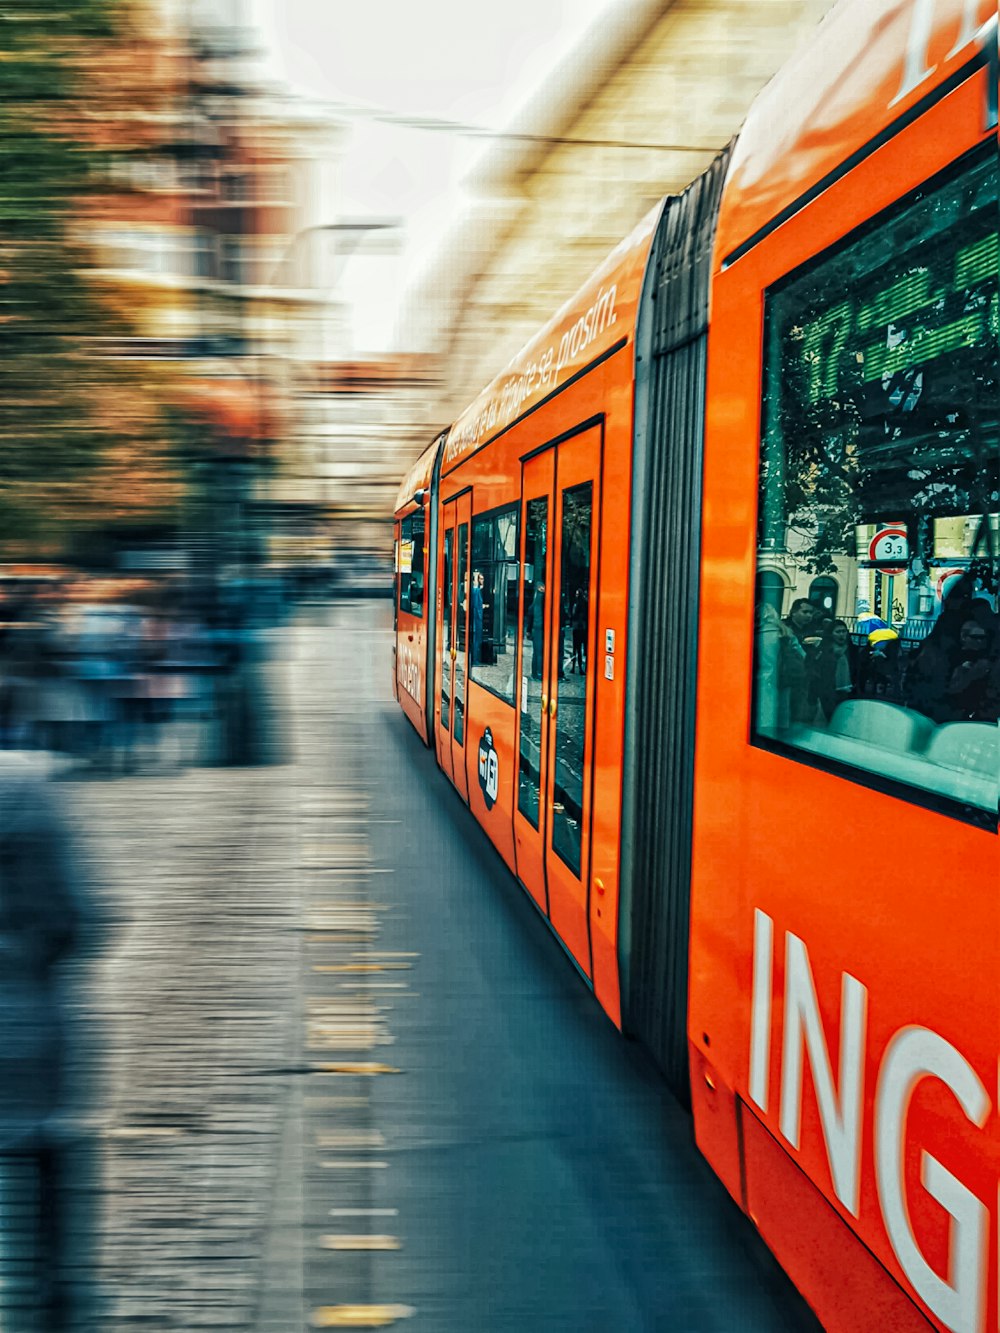 a blurry photo of a train on a city street